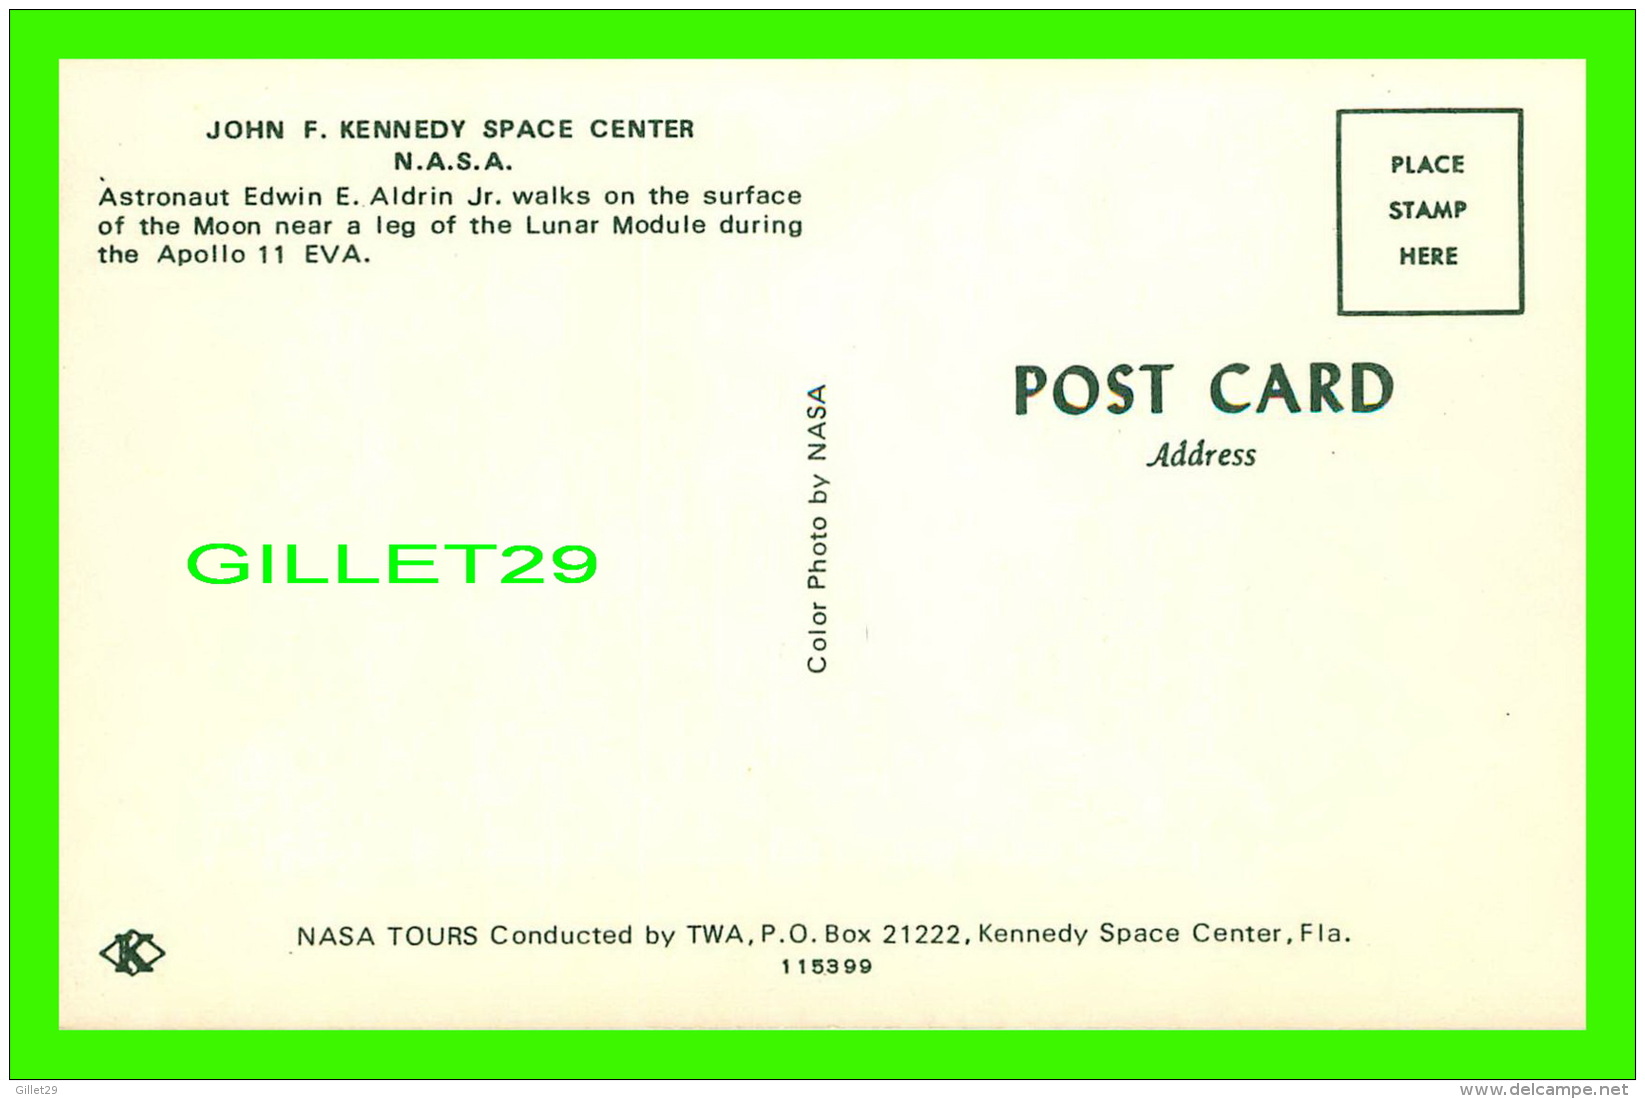 TRANSPORTS, ESPACE - JOHN F. KENNEDY SPACE CENTER N.A.S..A. - ASTRONAUT EDWINN ALDRIN Jr ON THE MOON APOLLO 11 EVA - - Space